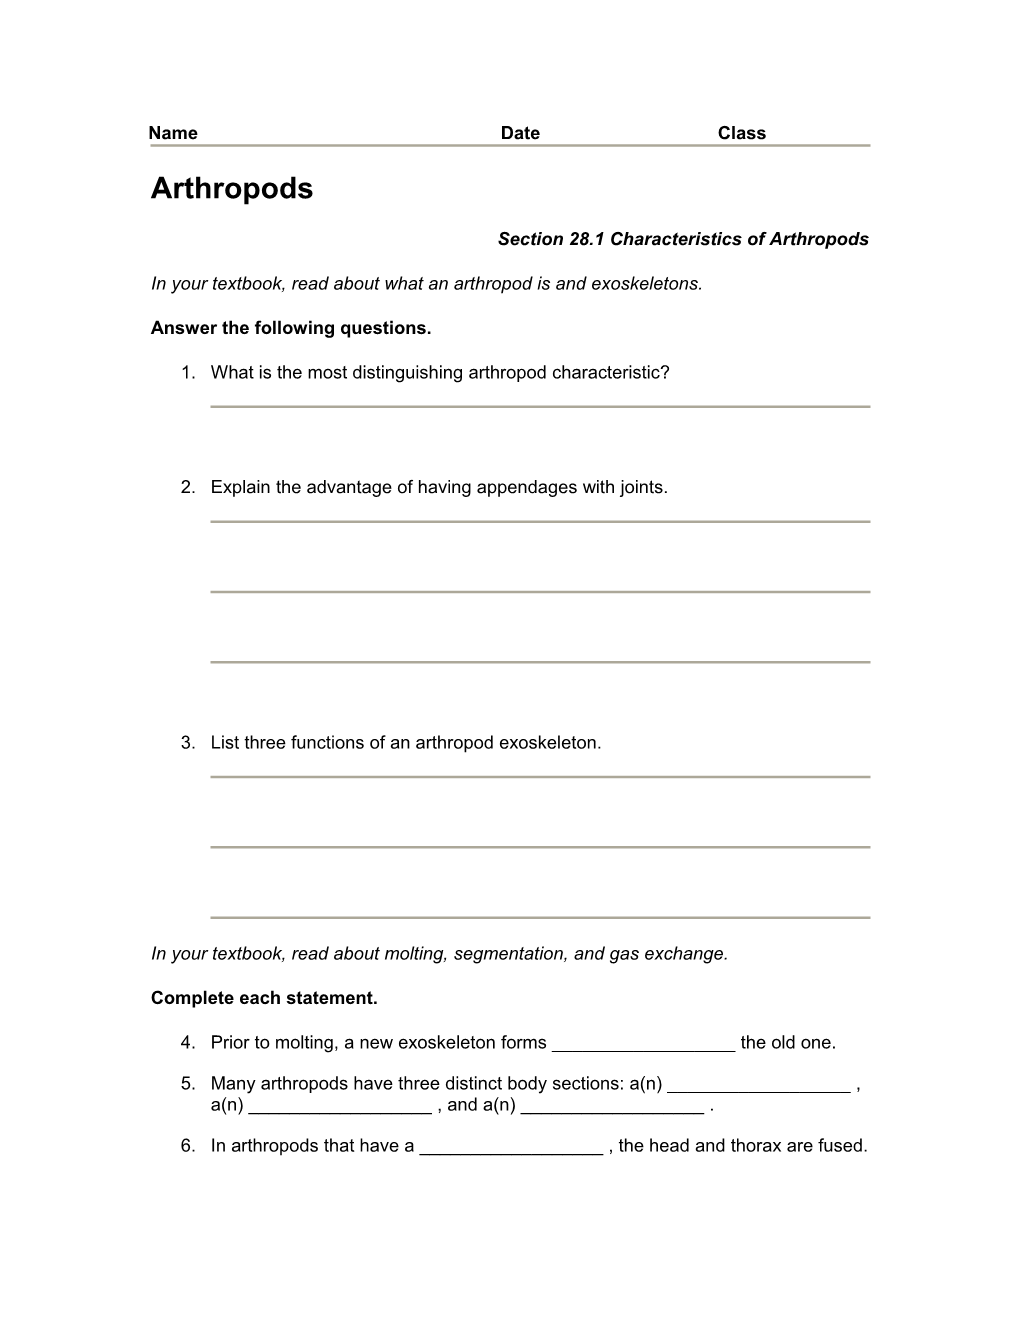 Section 28.1 Characteristics of Arthropods